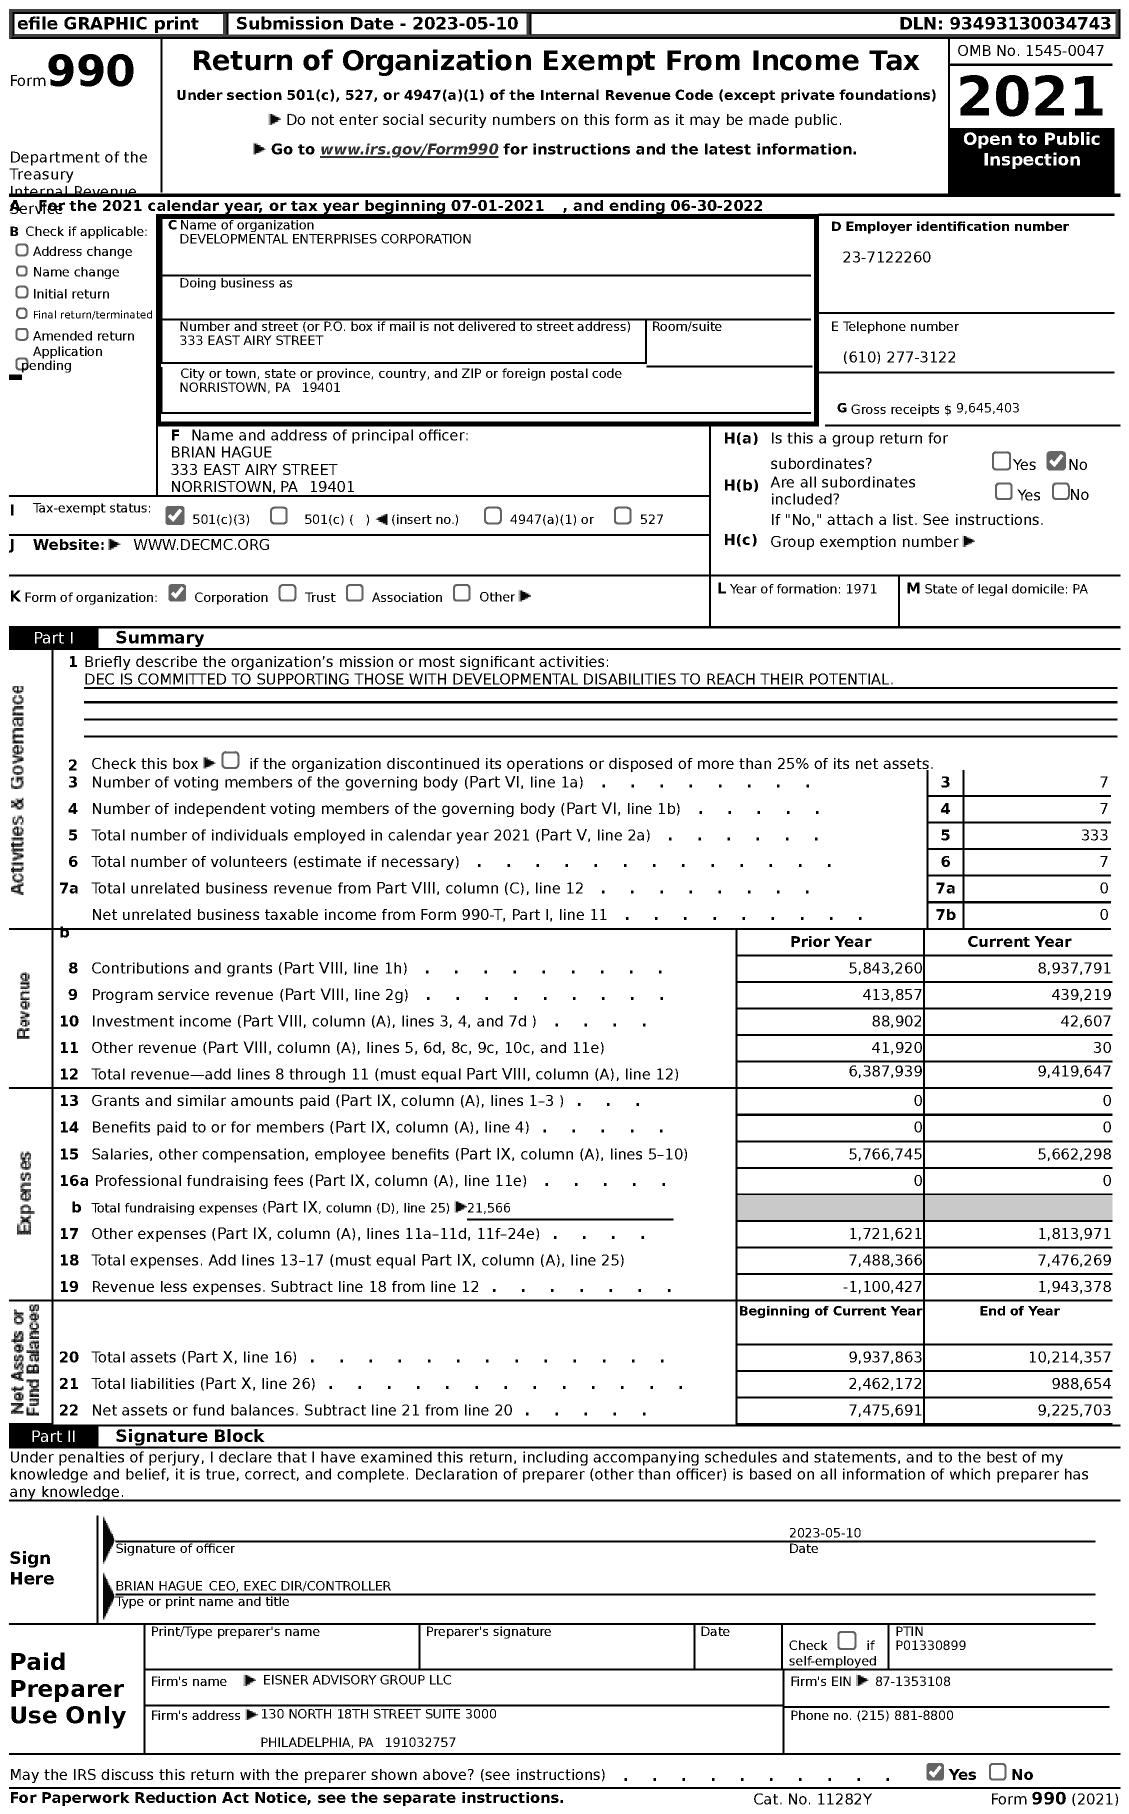 Image of first page of 2021 Form 990 for DEVELOPMENTAL Enterprises Corporation (DEC)